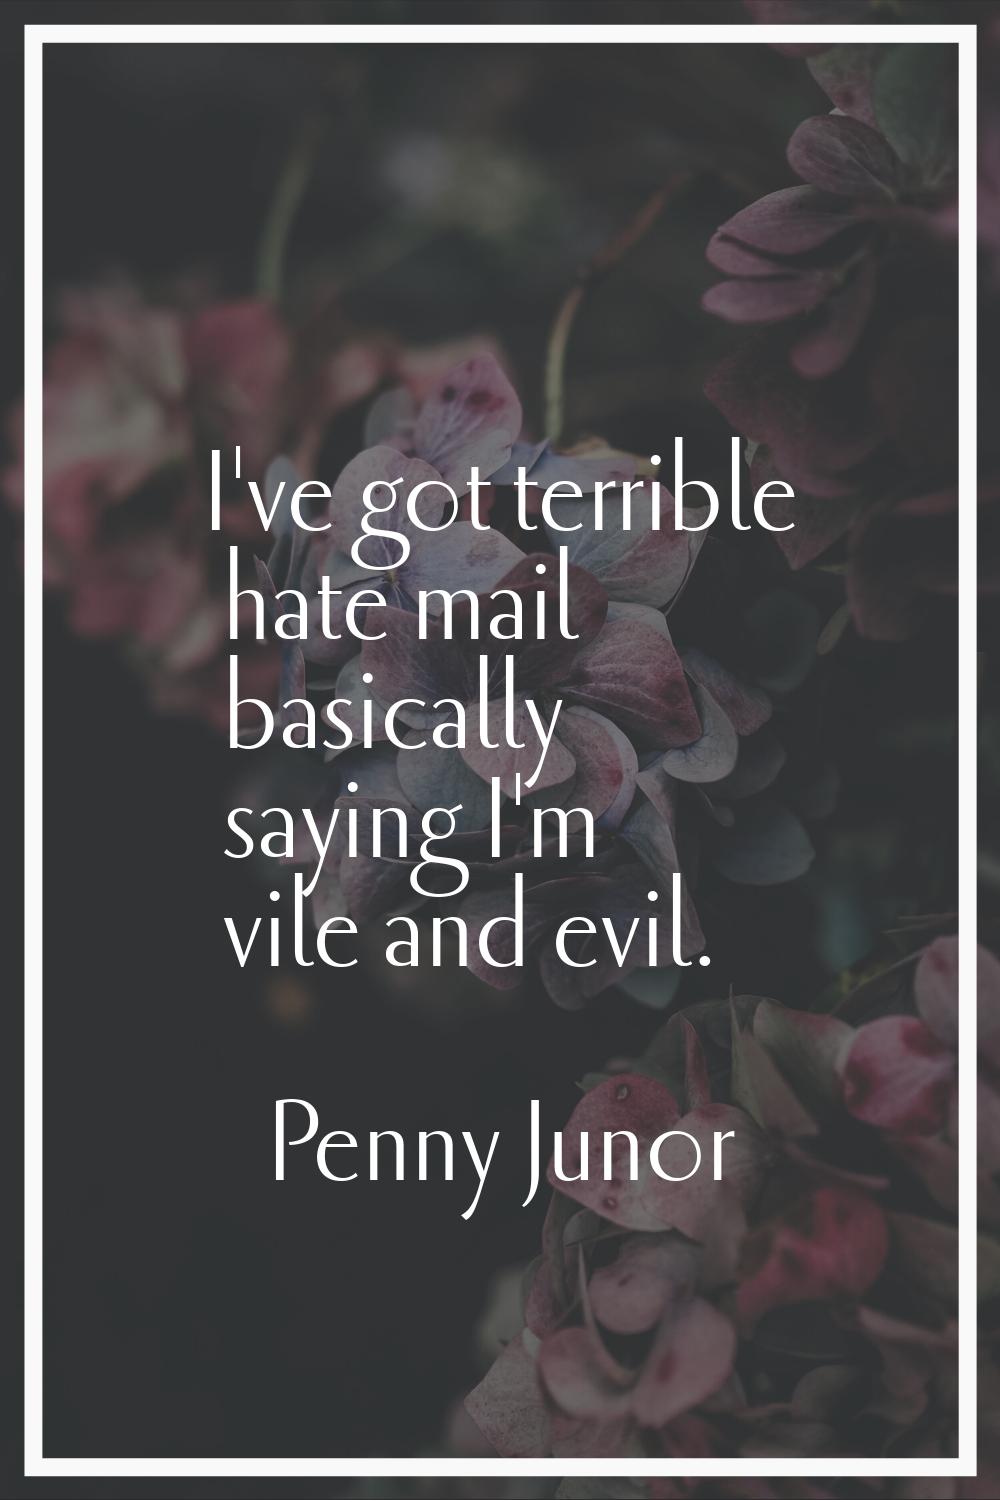 I've got terrible hate mail basically saying I'm vile and evil.